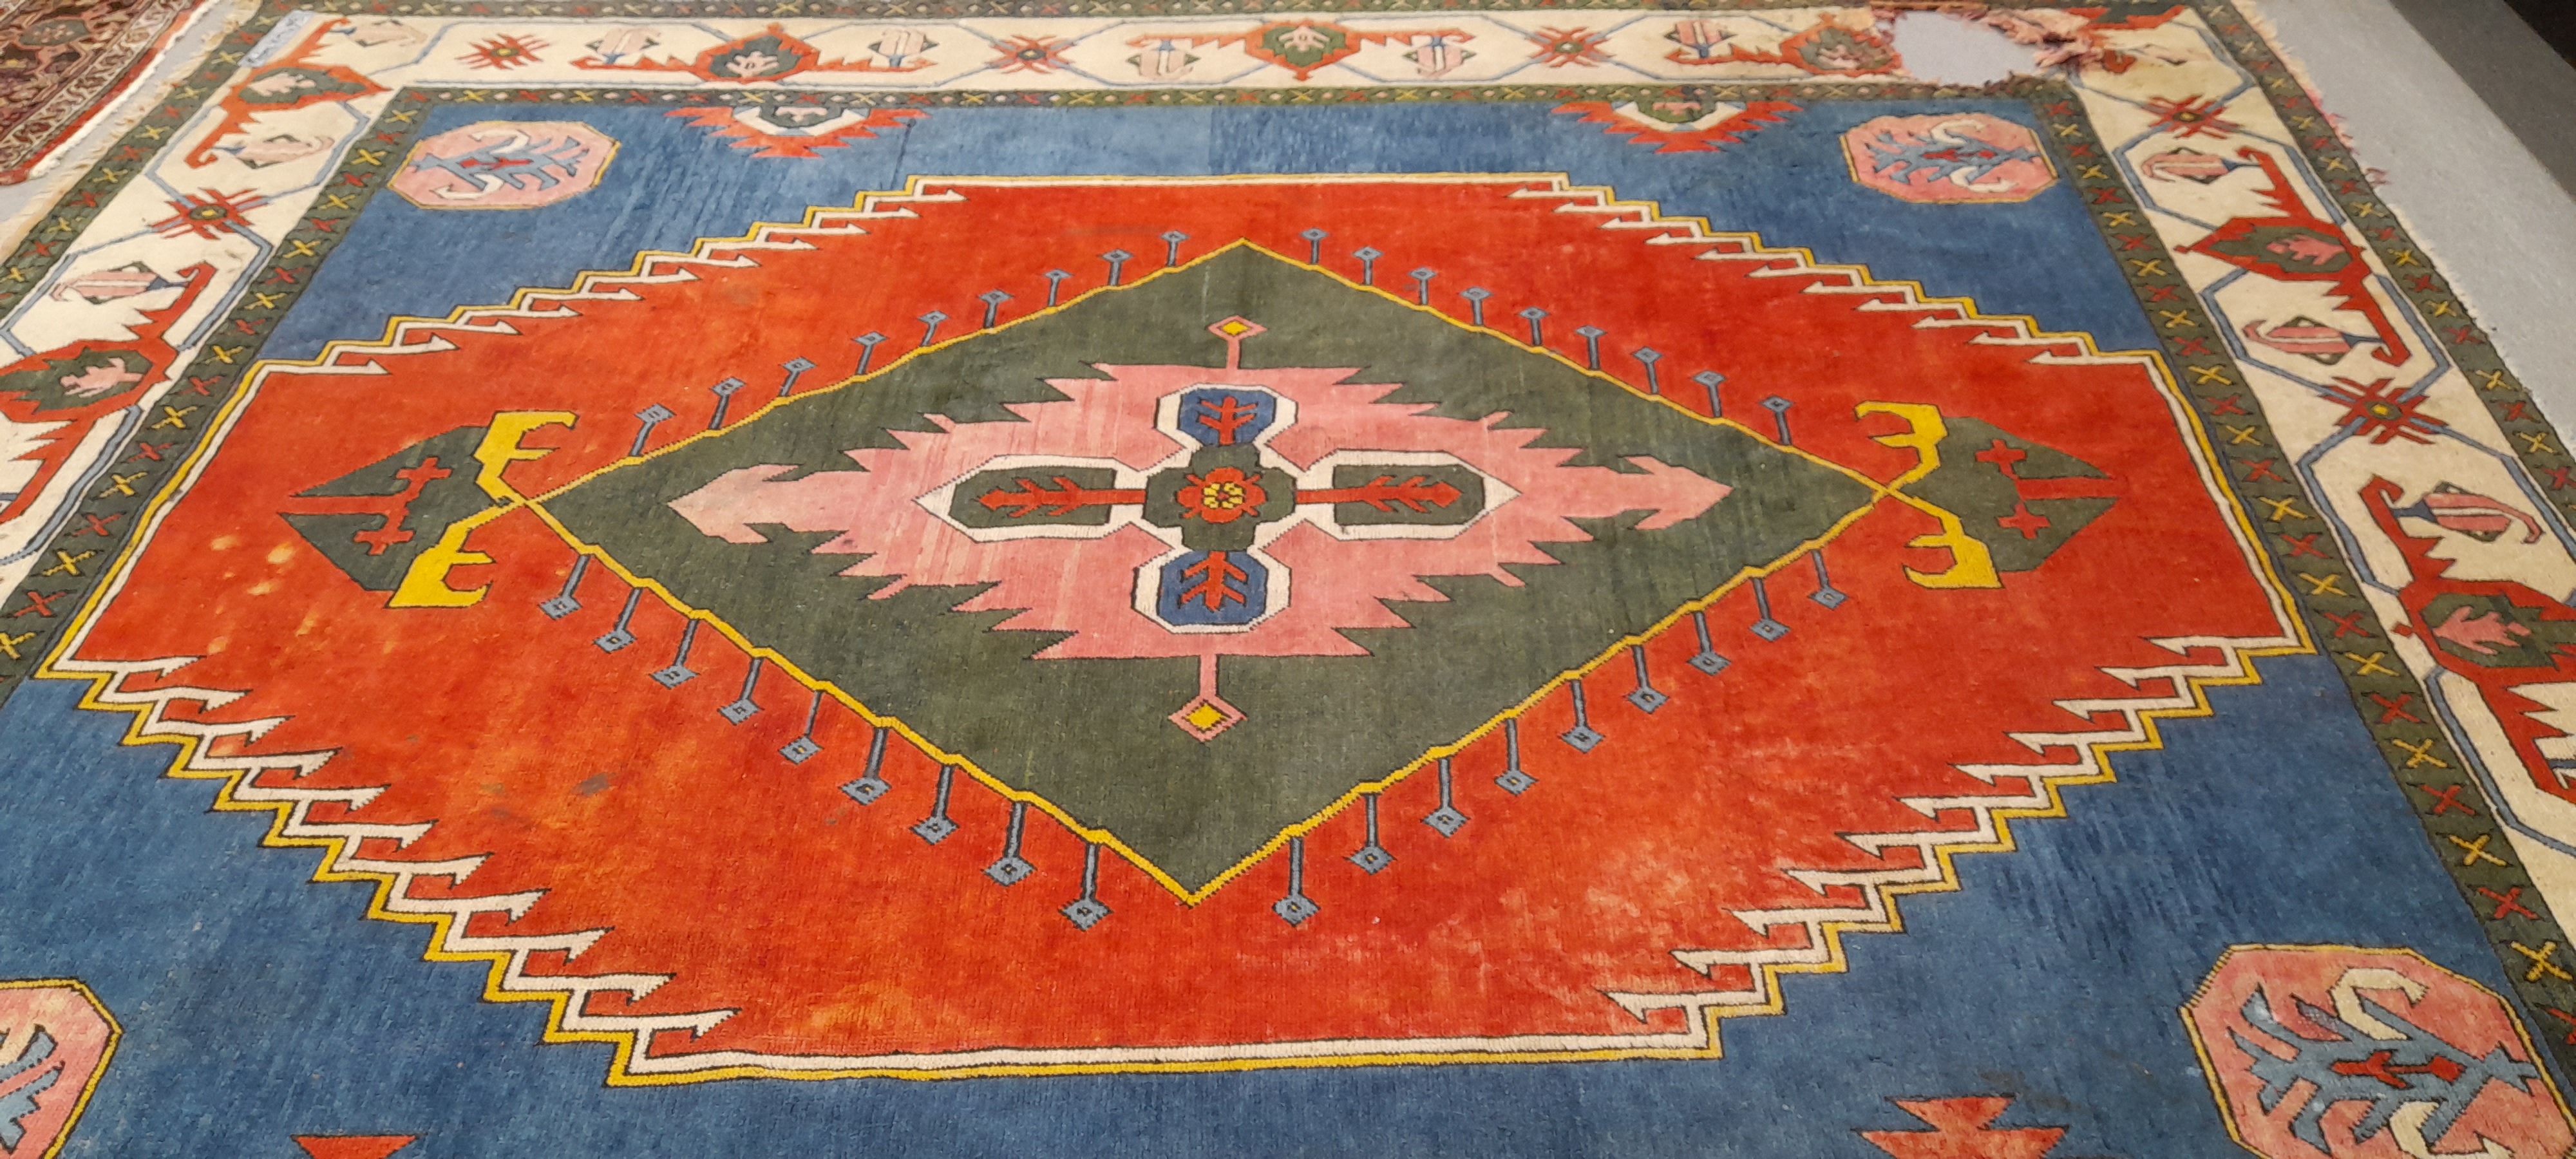 A TURKISH CARPET OF TRIBAL DESIGN 369 x 300 cm - Image 2 of 8